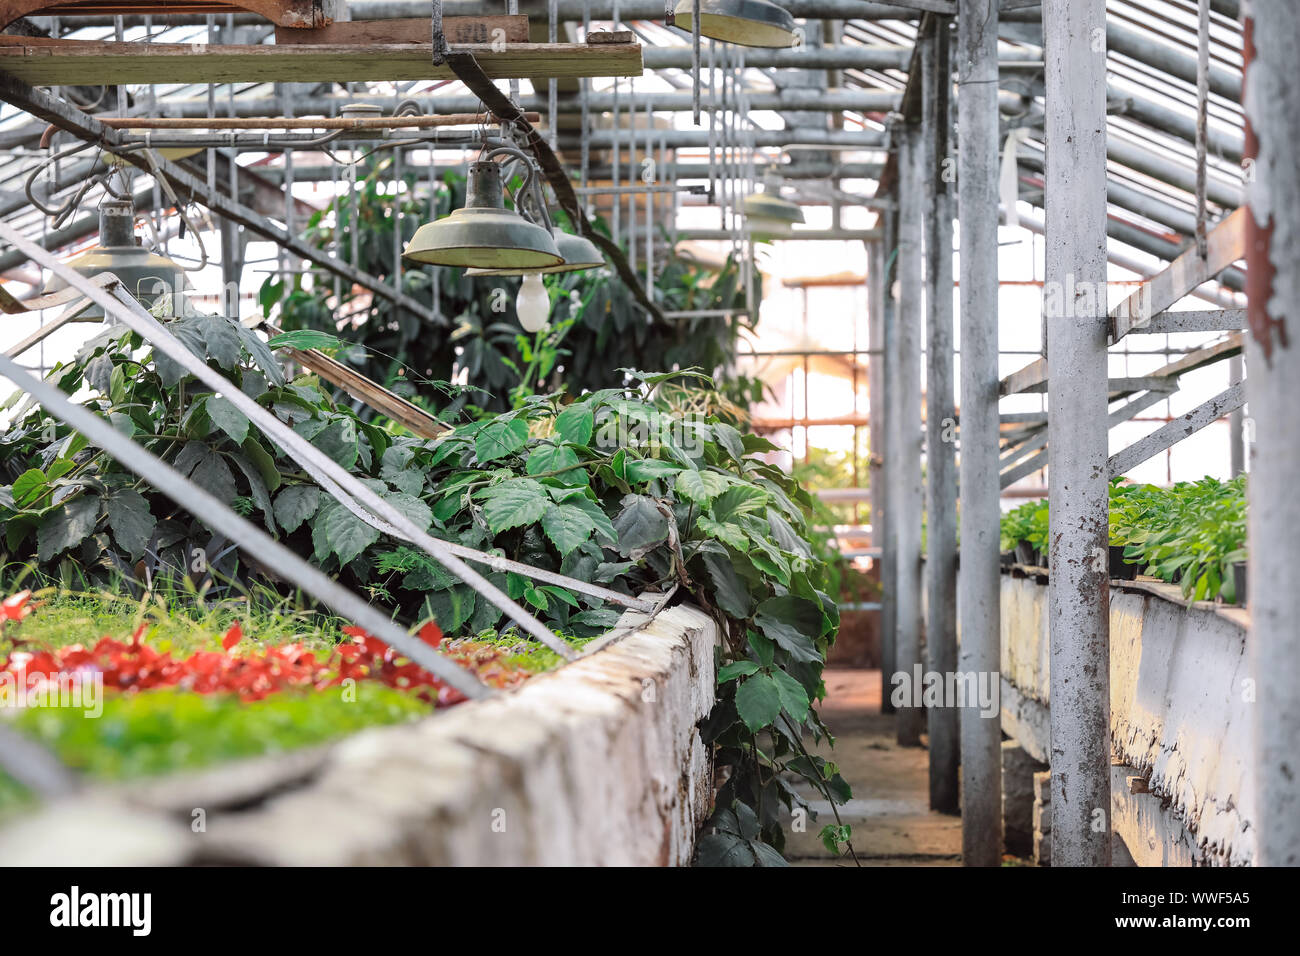 Abundance of plants in greenhouse Stock Photo